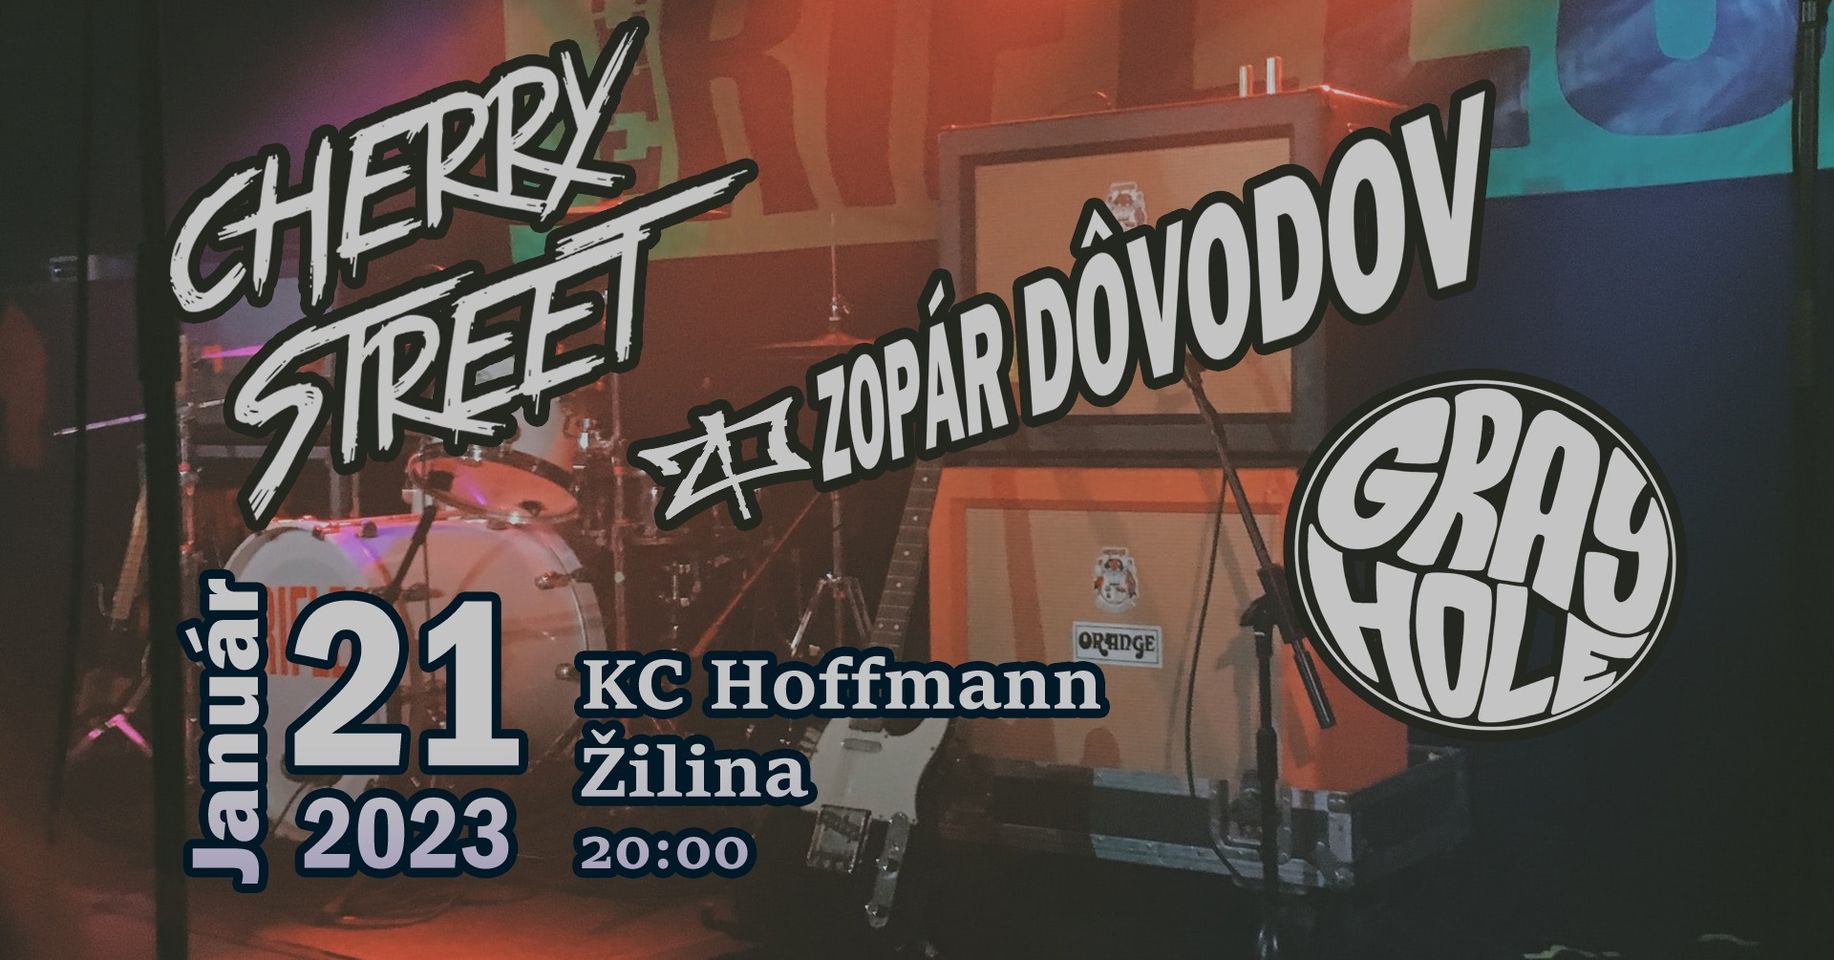 CHERRY STREET + ZOPÁR DÔVODOV + GRAYHOLE // KC HOFFMANN KC Hoffmann